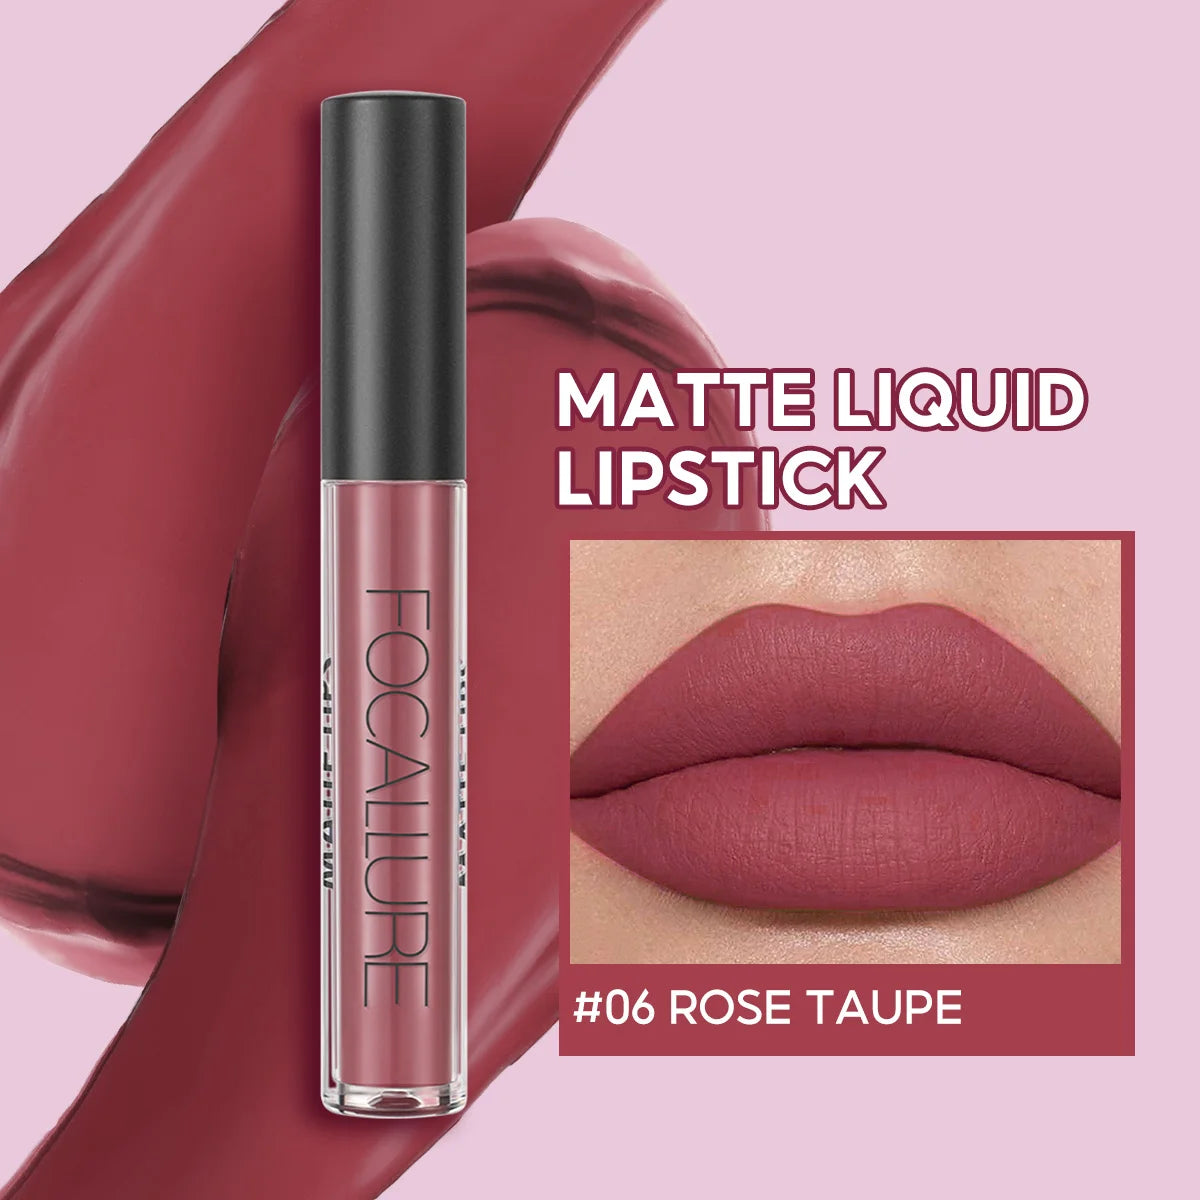 Focallure Ultra Matte Long-Lasting Liquid Lipstick